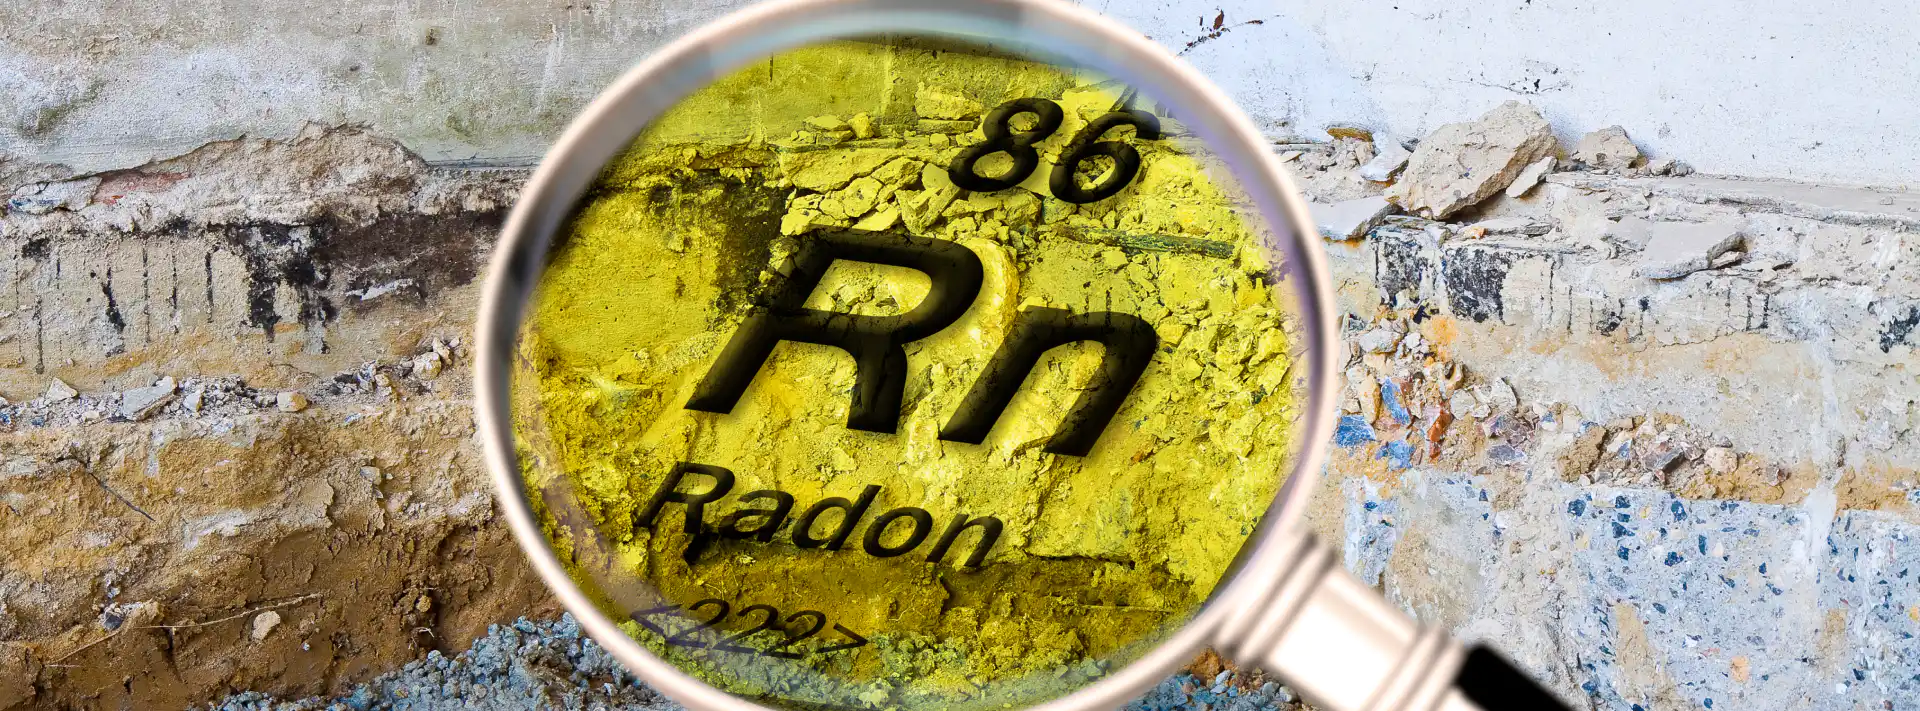 radon services 02 grafton wi